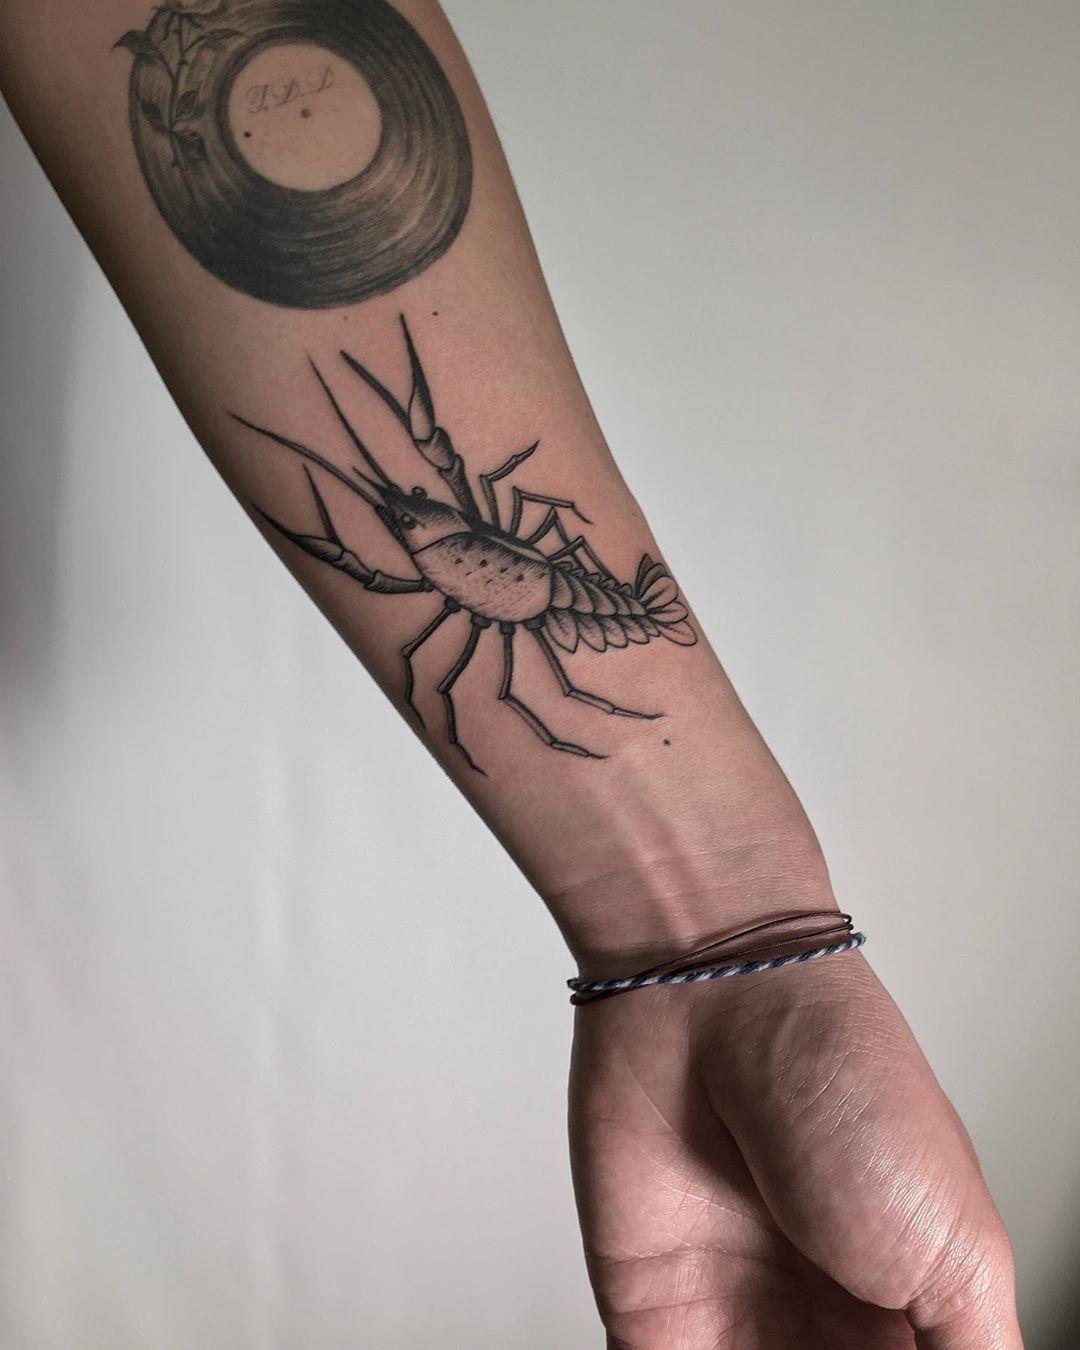 Crawfish tattoo by @justinoliviertattoo